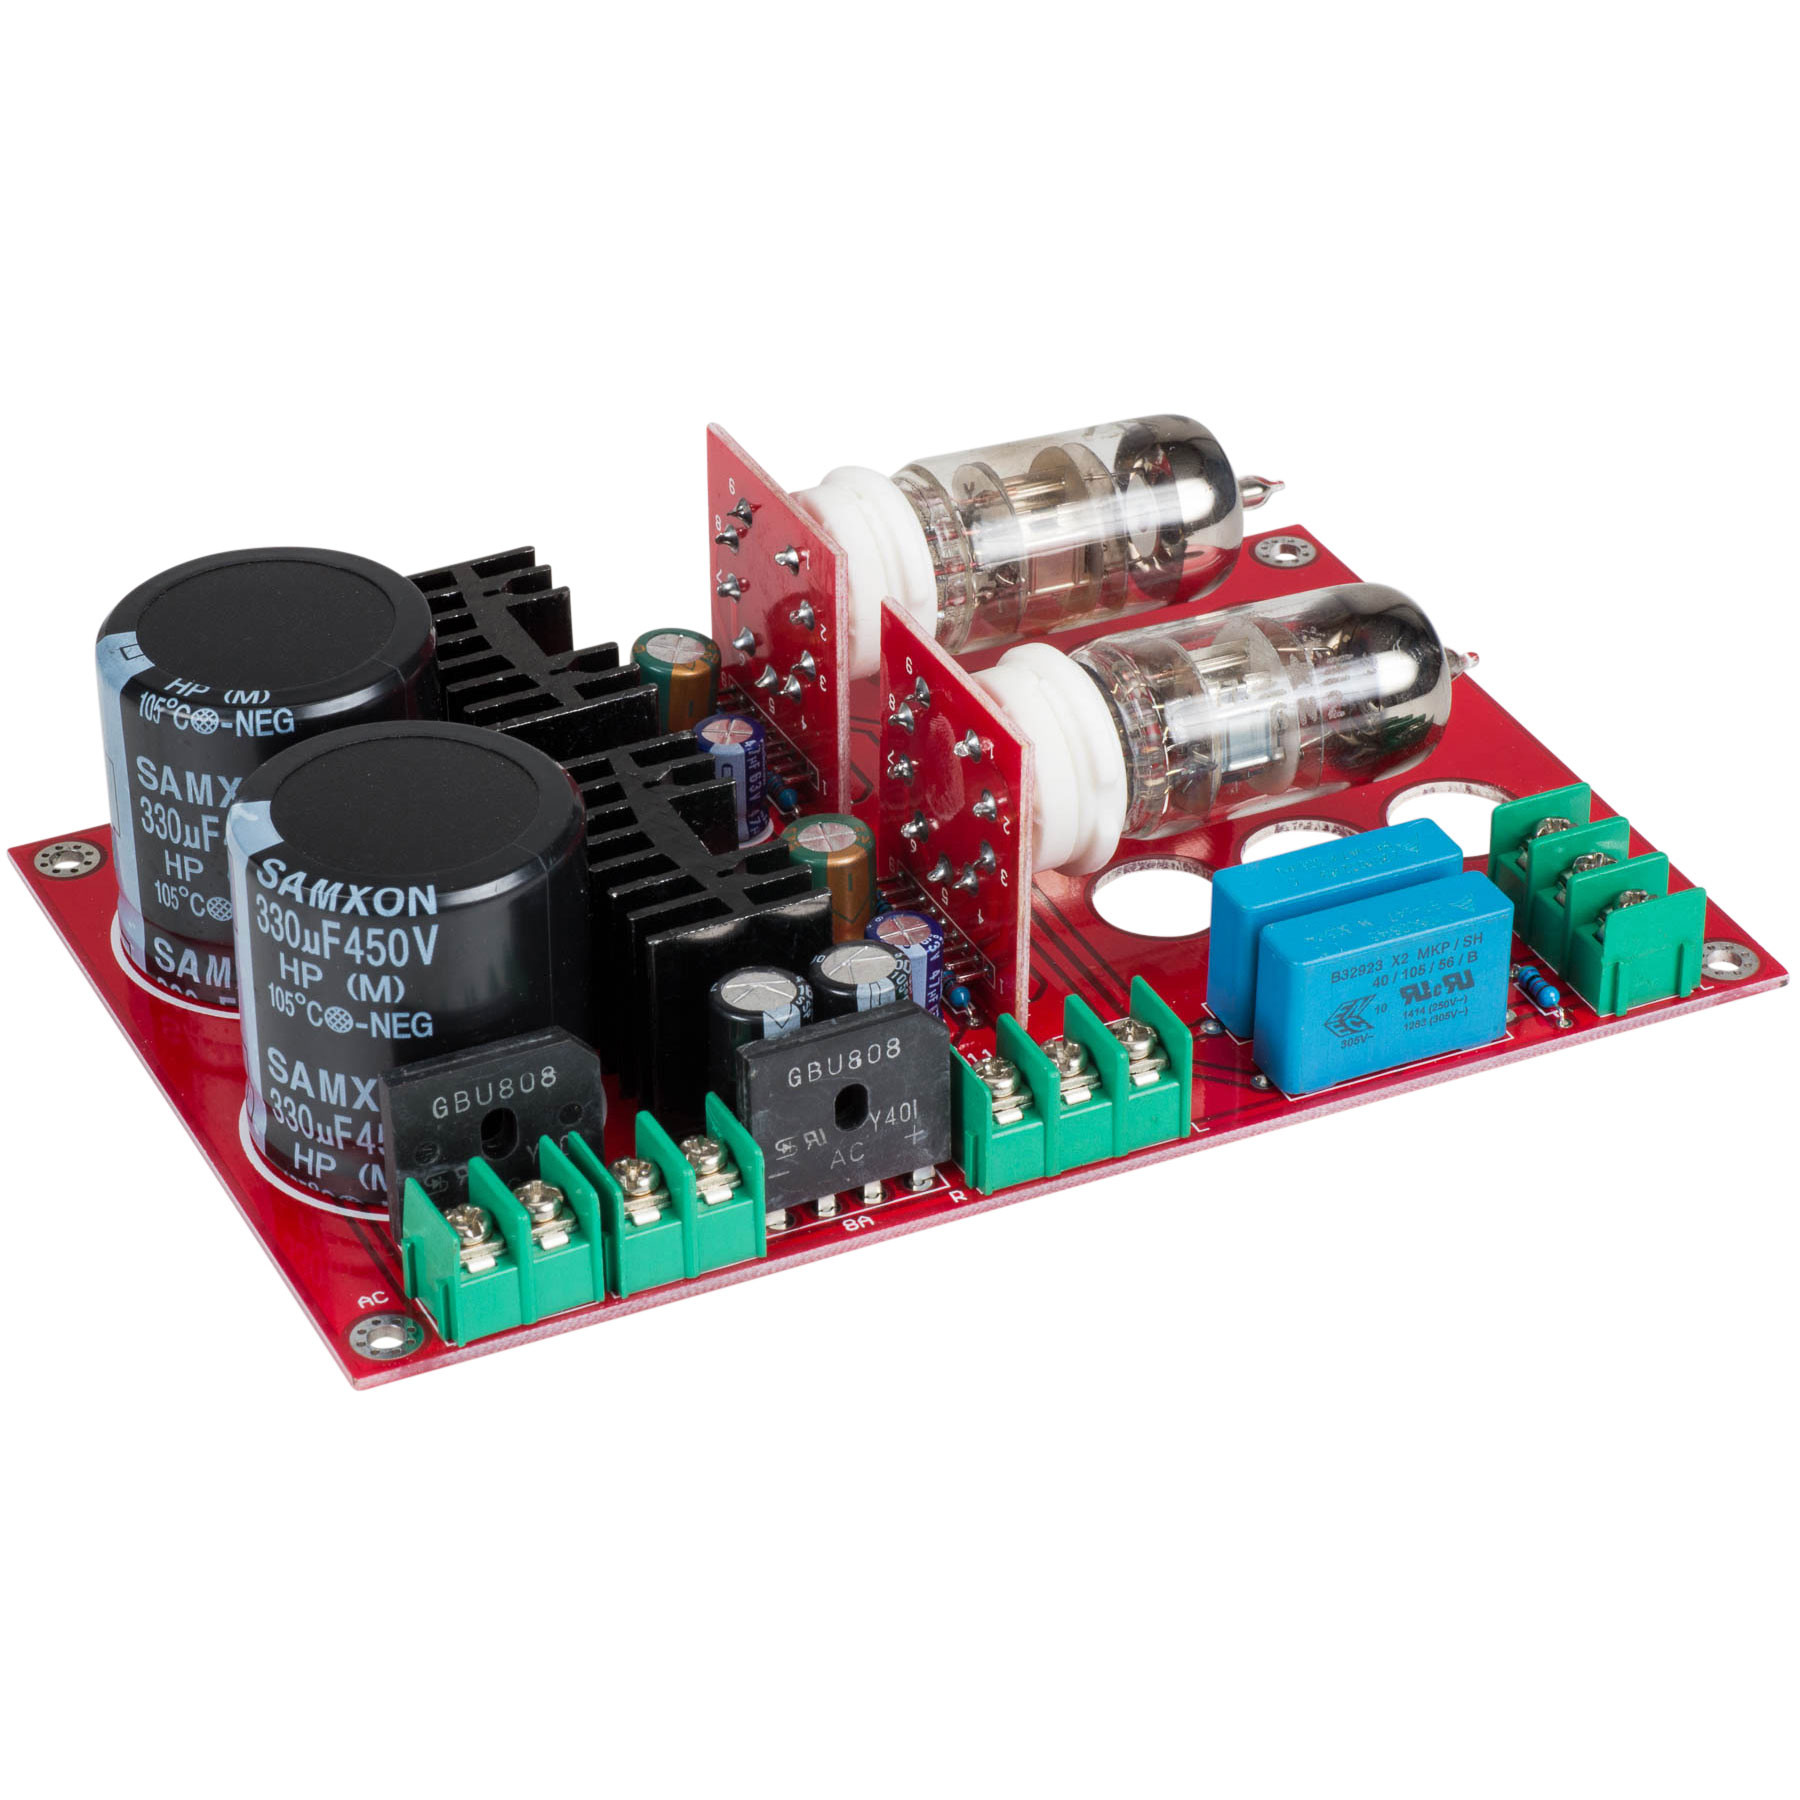 DIY Stereo Amplifier Kit
 Yuan Jing Pre and Tube Amplifier Kit 6N2 SRPP for DIY